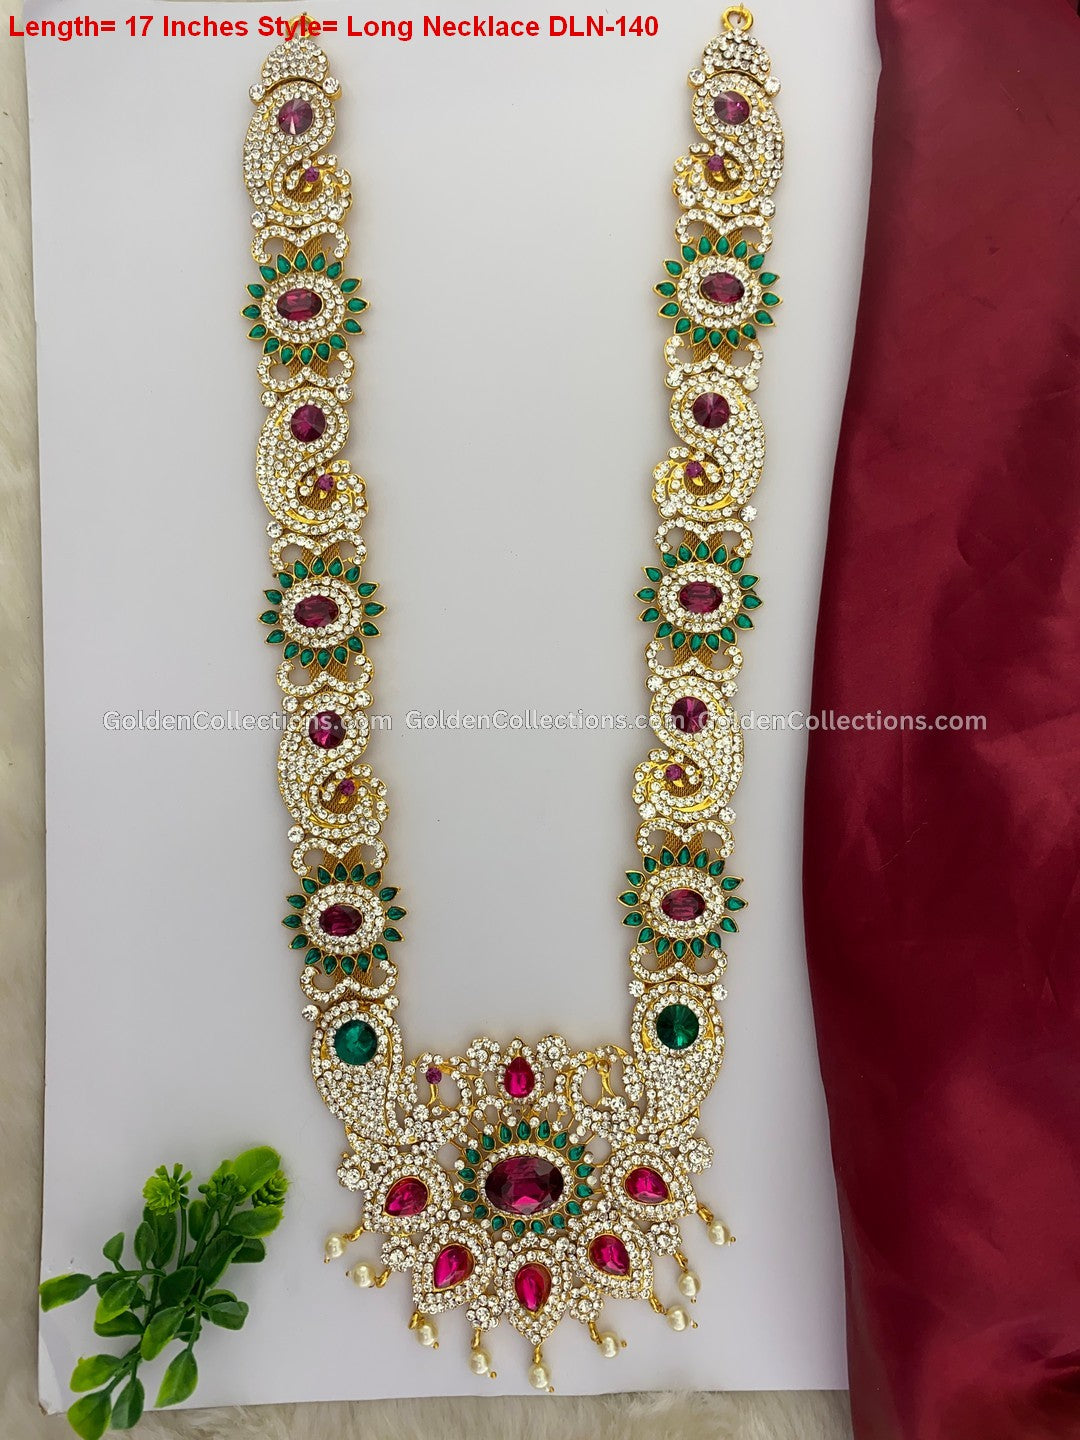 Hindu God Jewellery - Amman Stone Necklace for Deity DLN-140